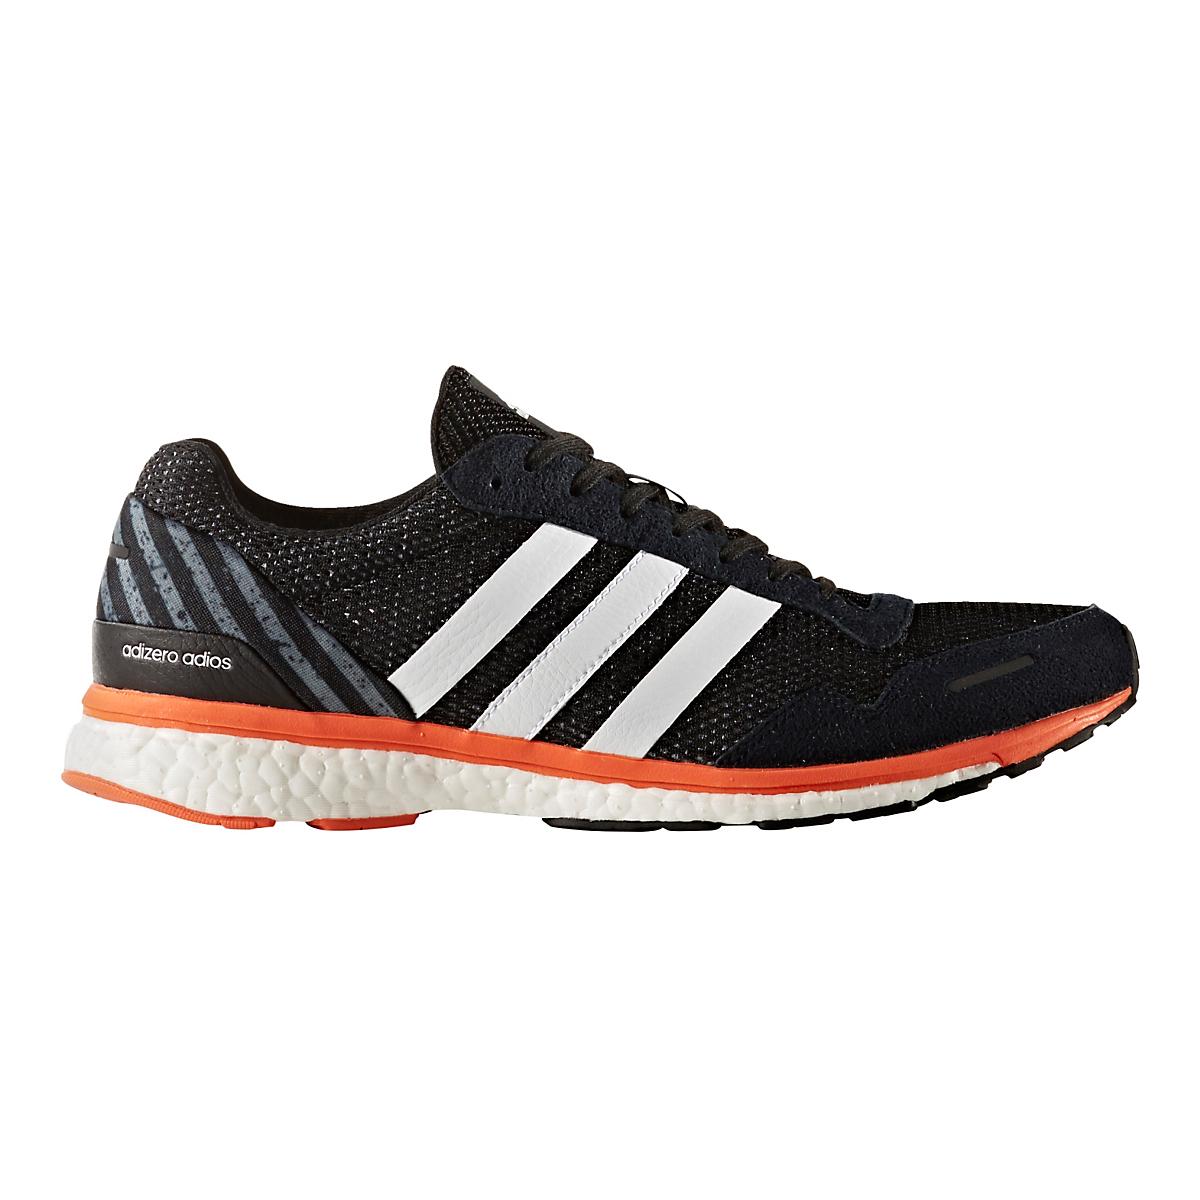 Mens adidas Adizero Adios 3 Running Shoe at Road Runner Sports